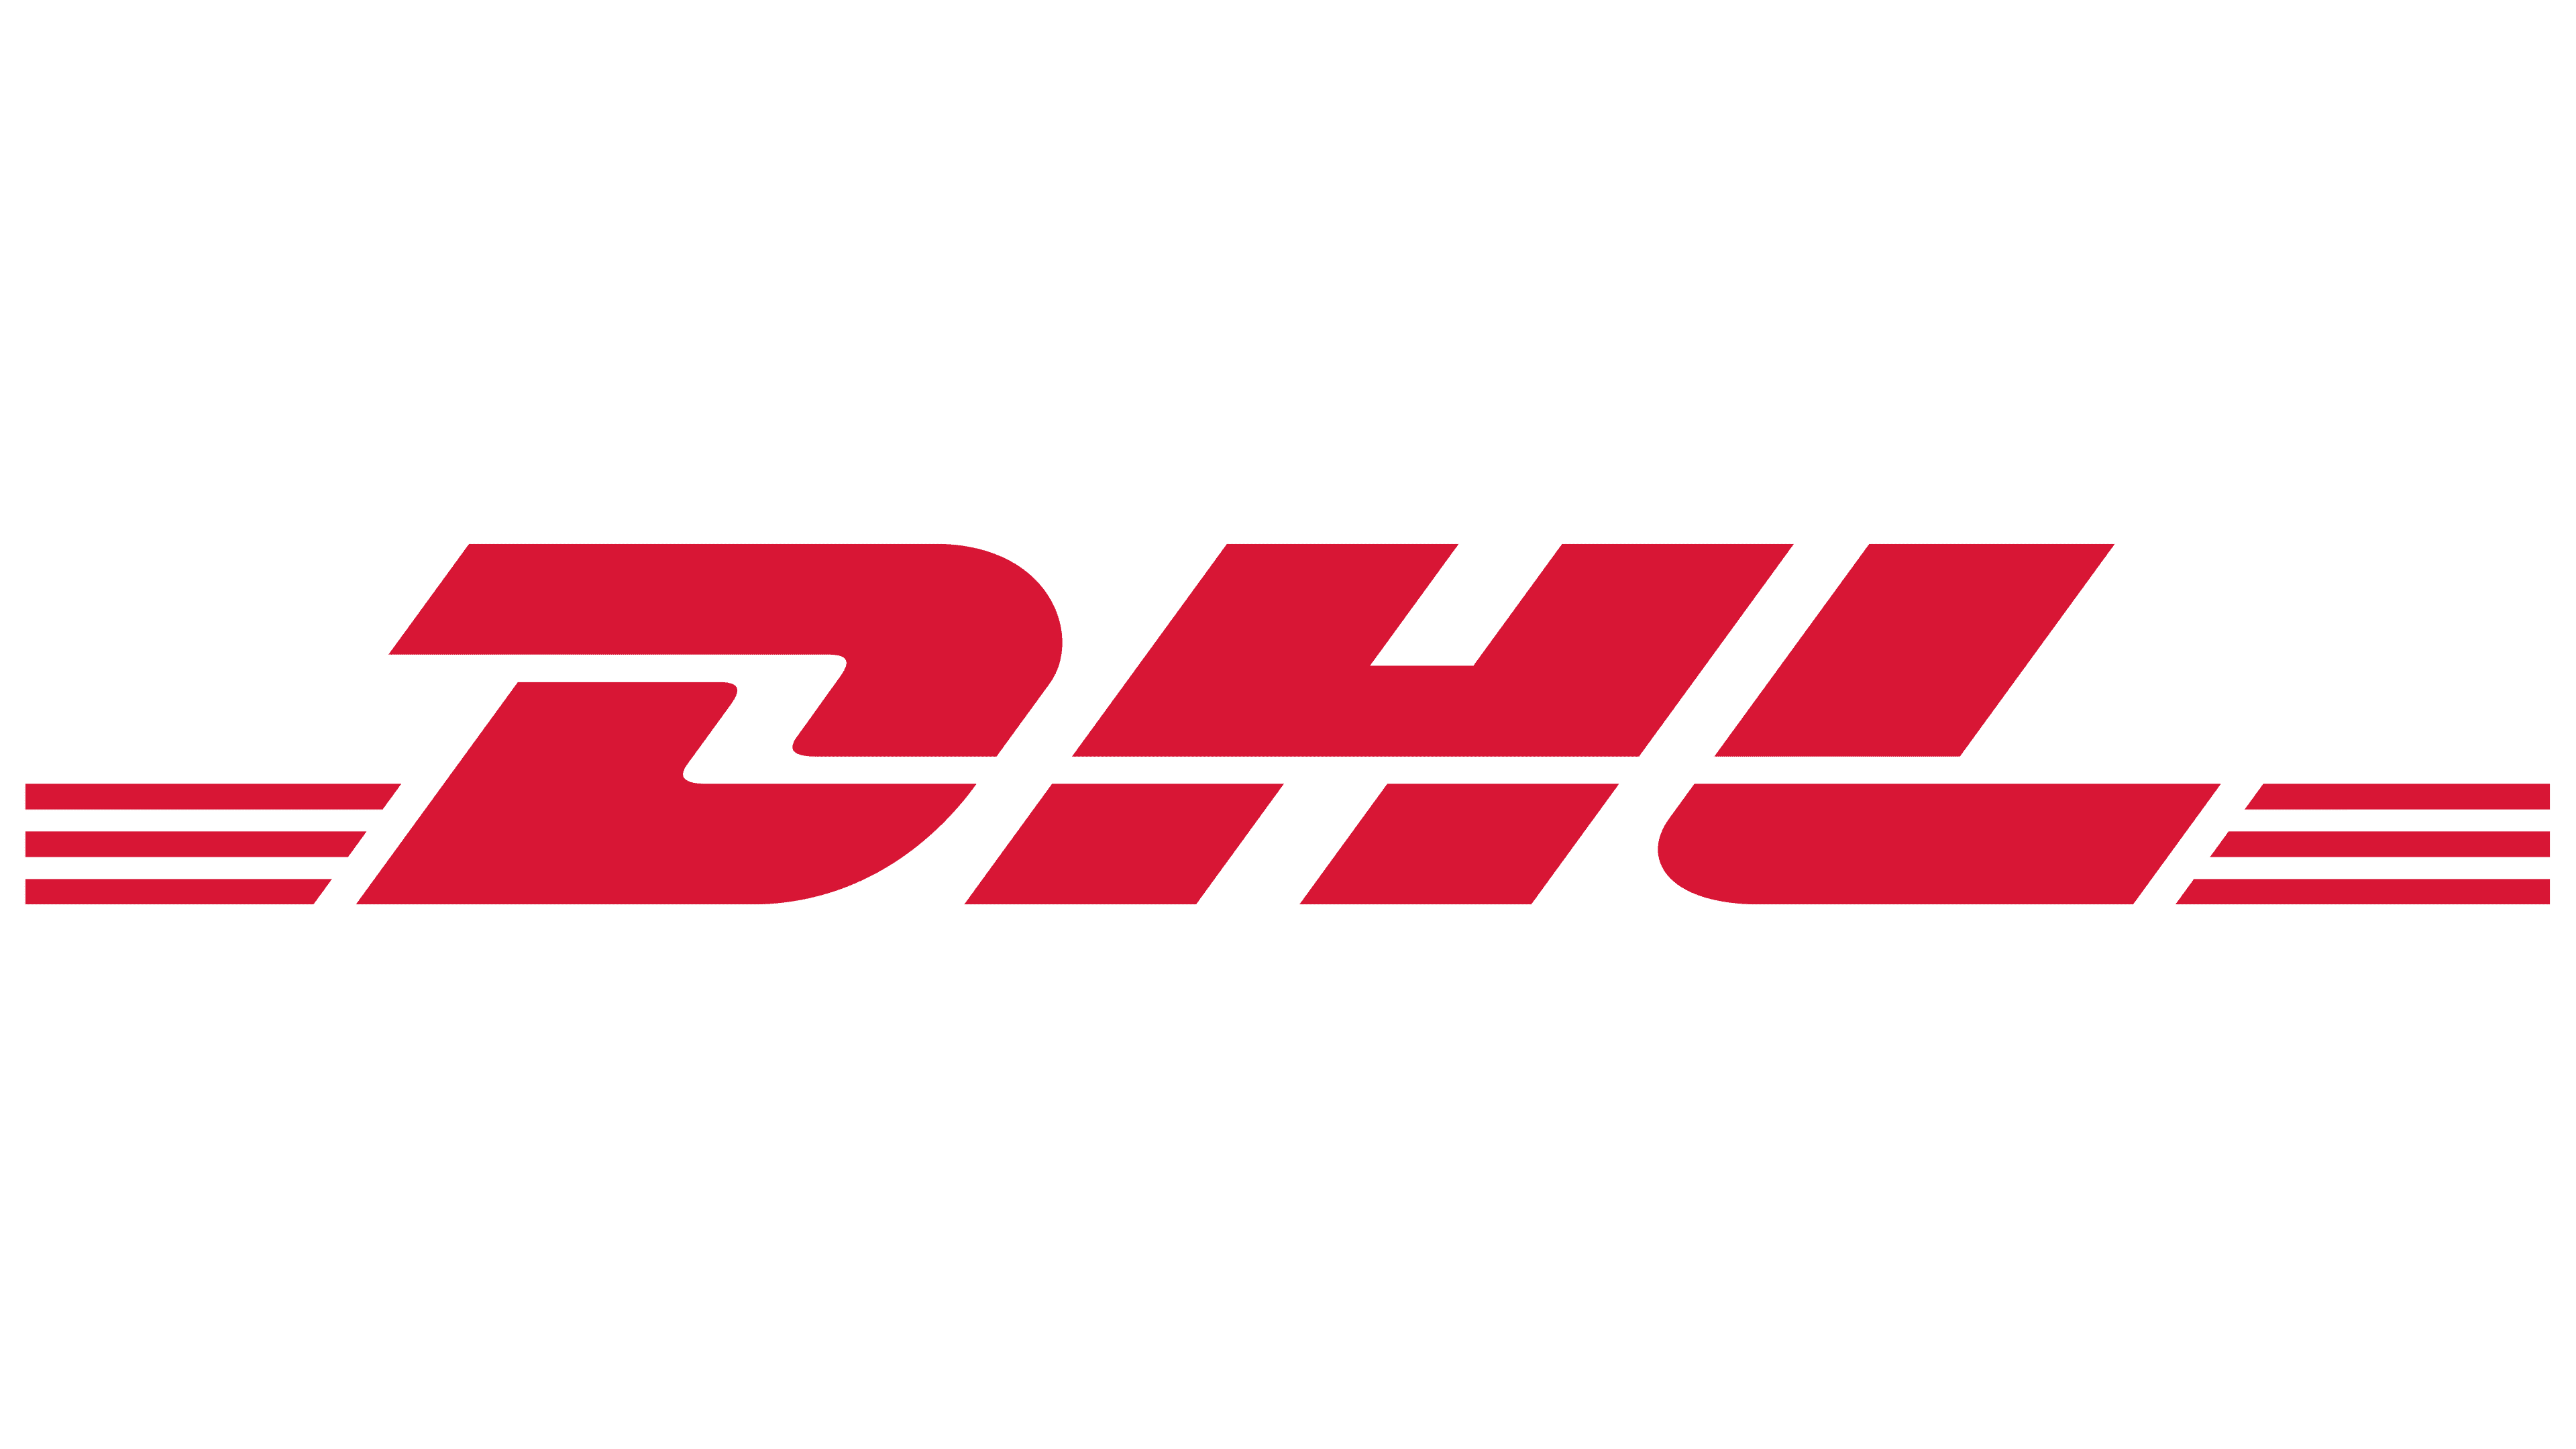 DHL-Symbol